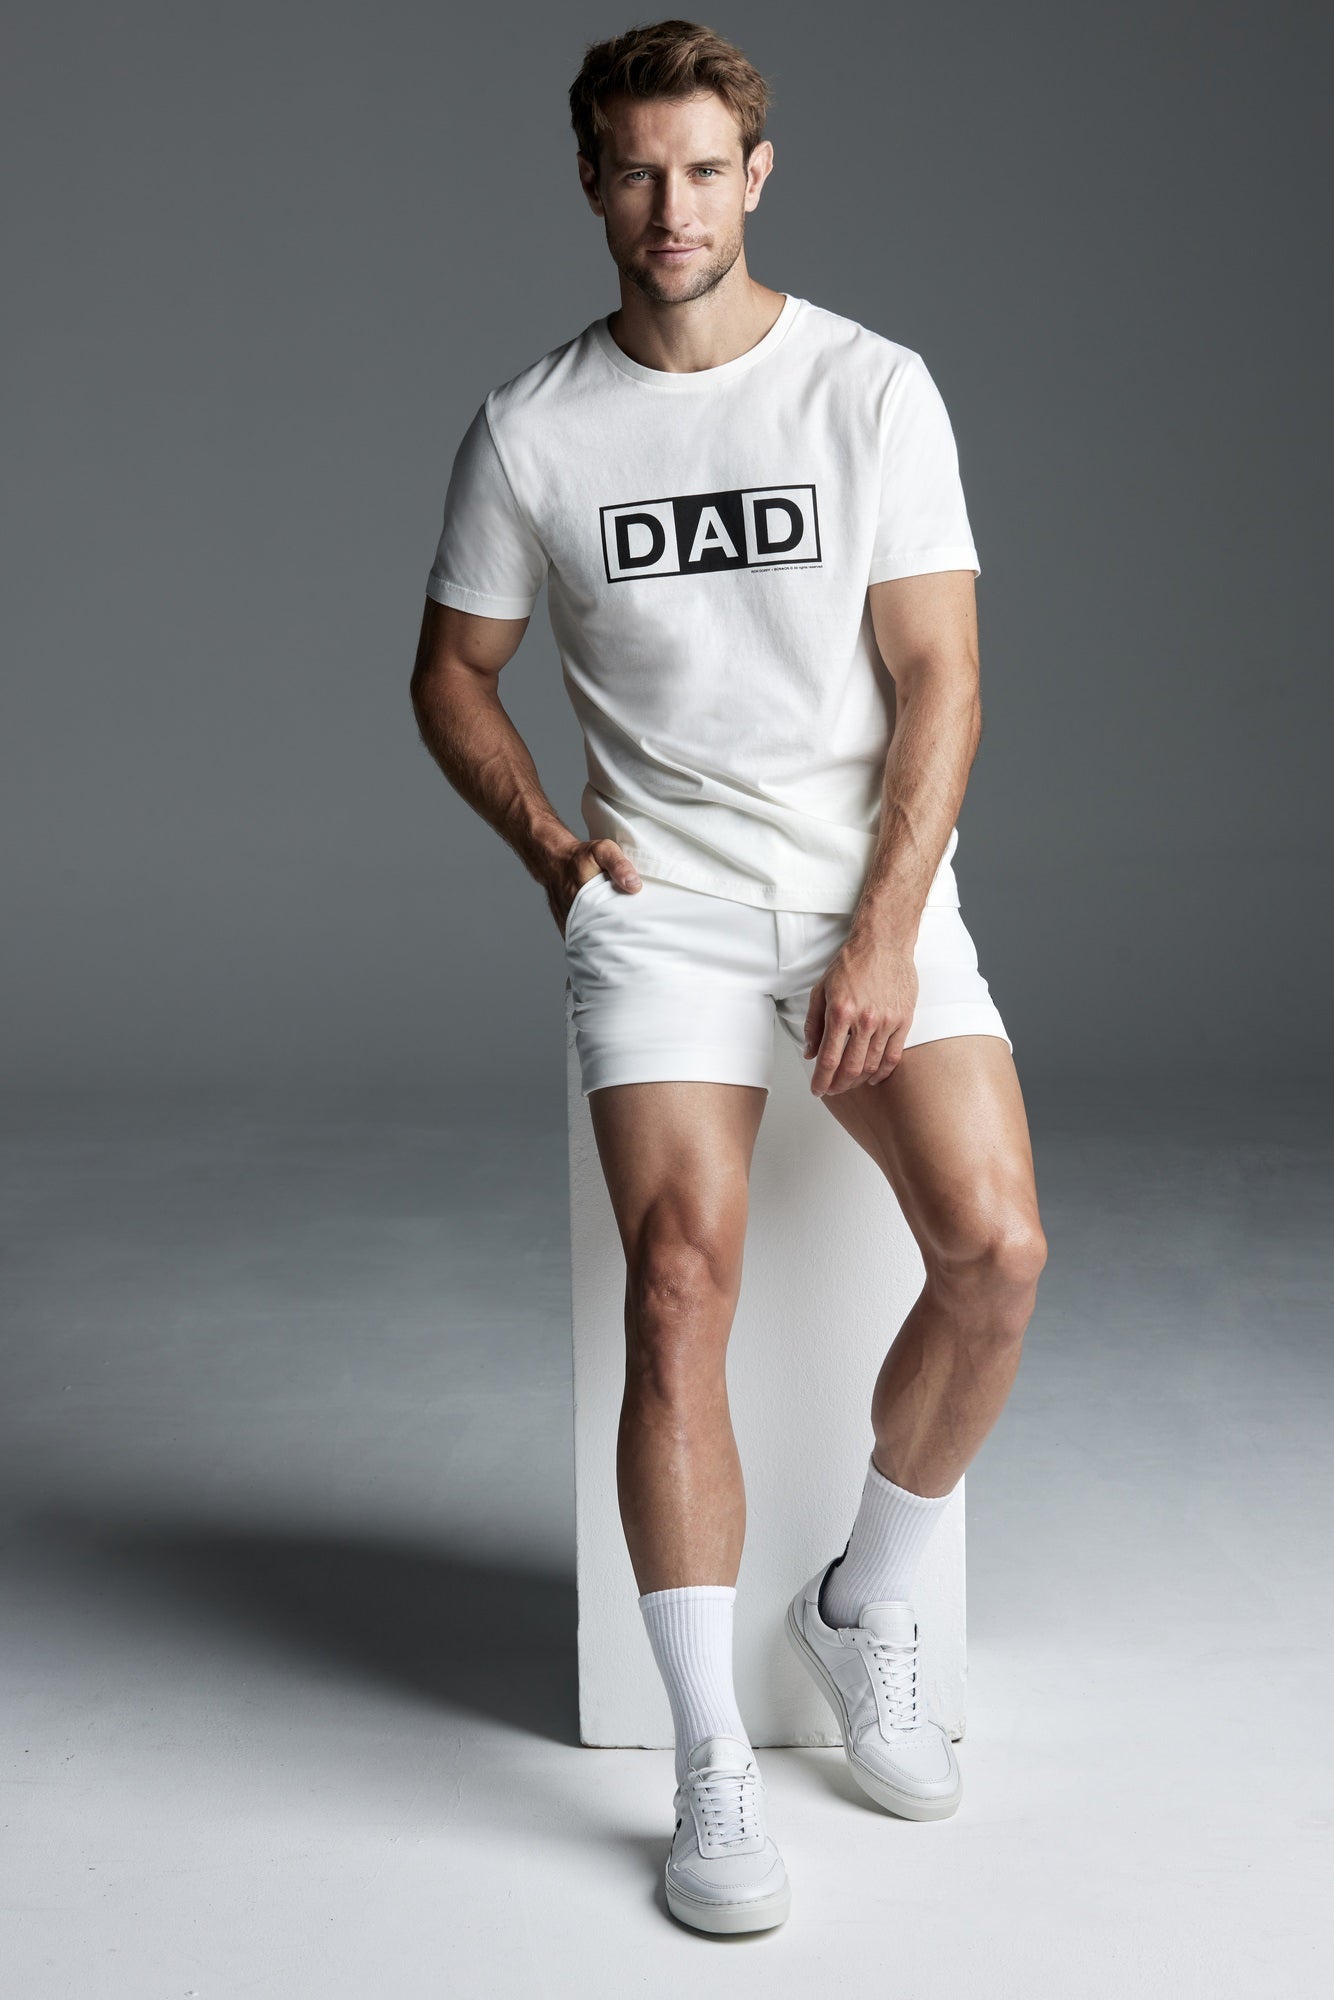 Tee-shirt - Dad écru Homme coton BONTON + RON DORFF